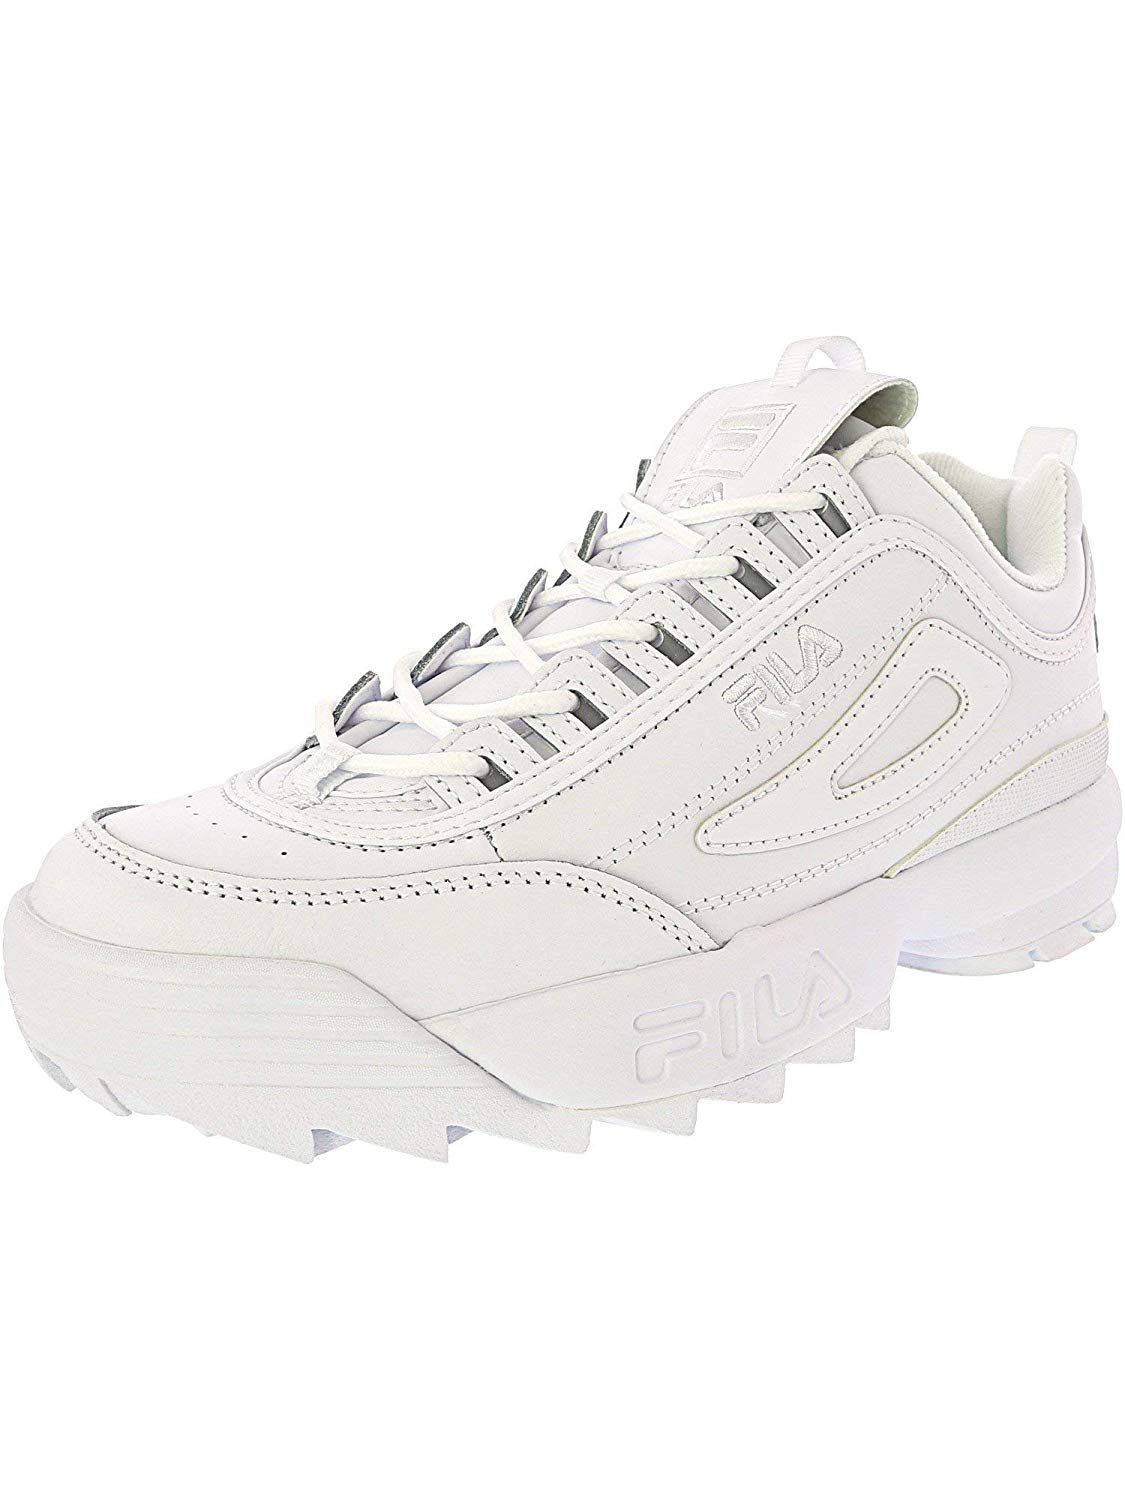 Fila Mens Disruptor II Premium Low Top Lace Up Fashion Sneakers, White ...